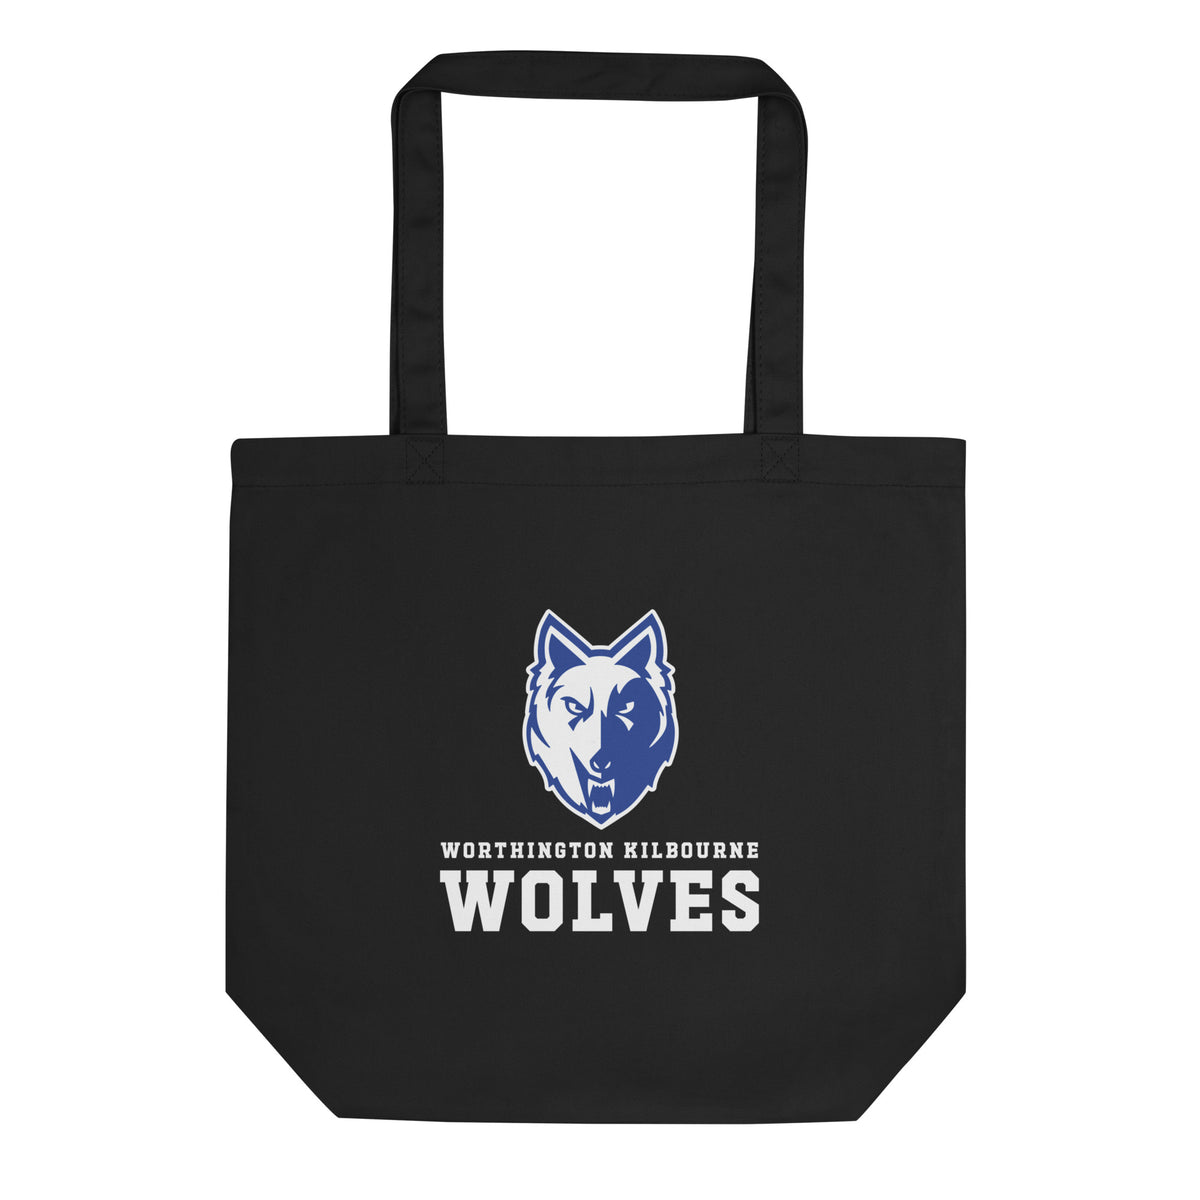 Worthington Kilbourne Wolves Tote Bag